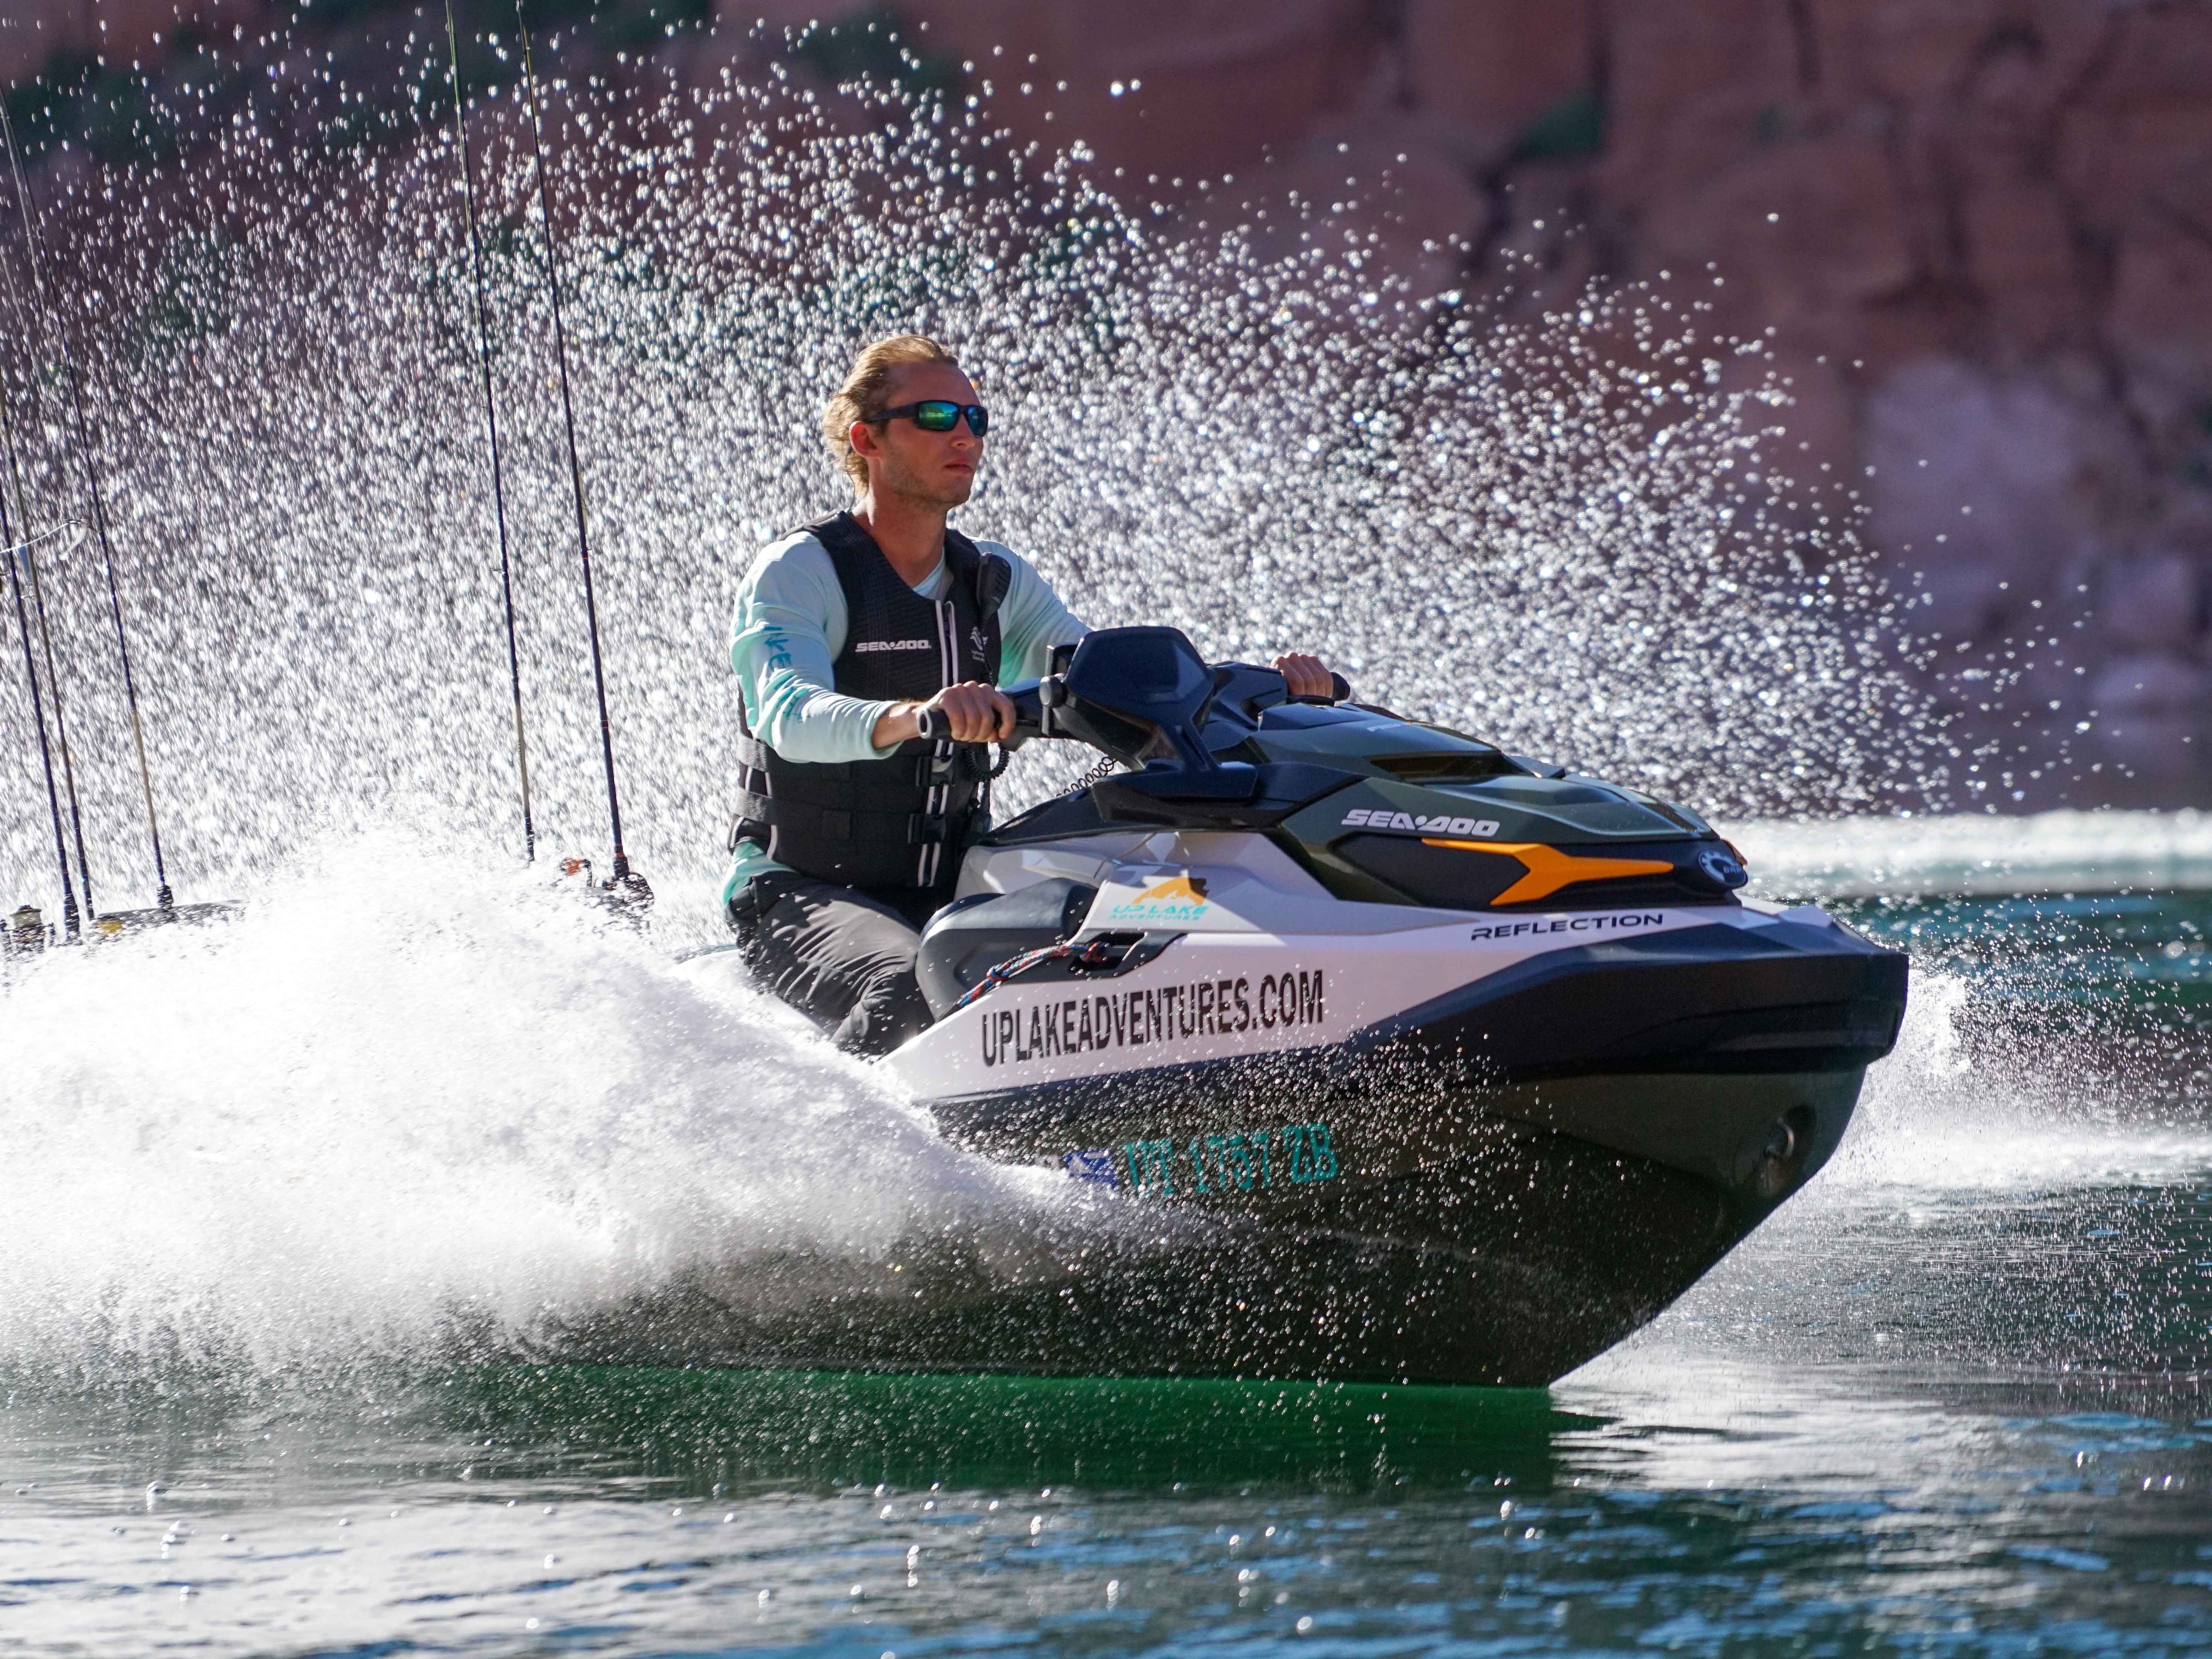 Kyle Naegeli riding on his Sea-Doo Fish Pro